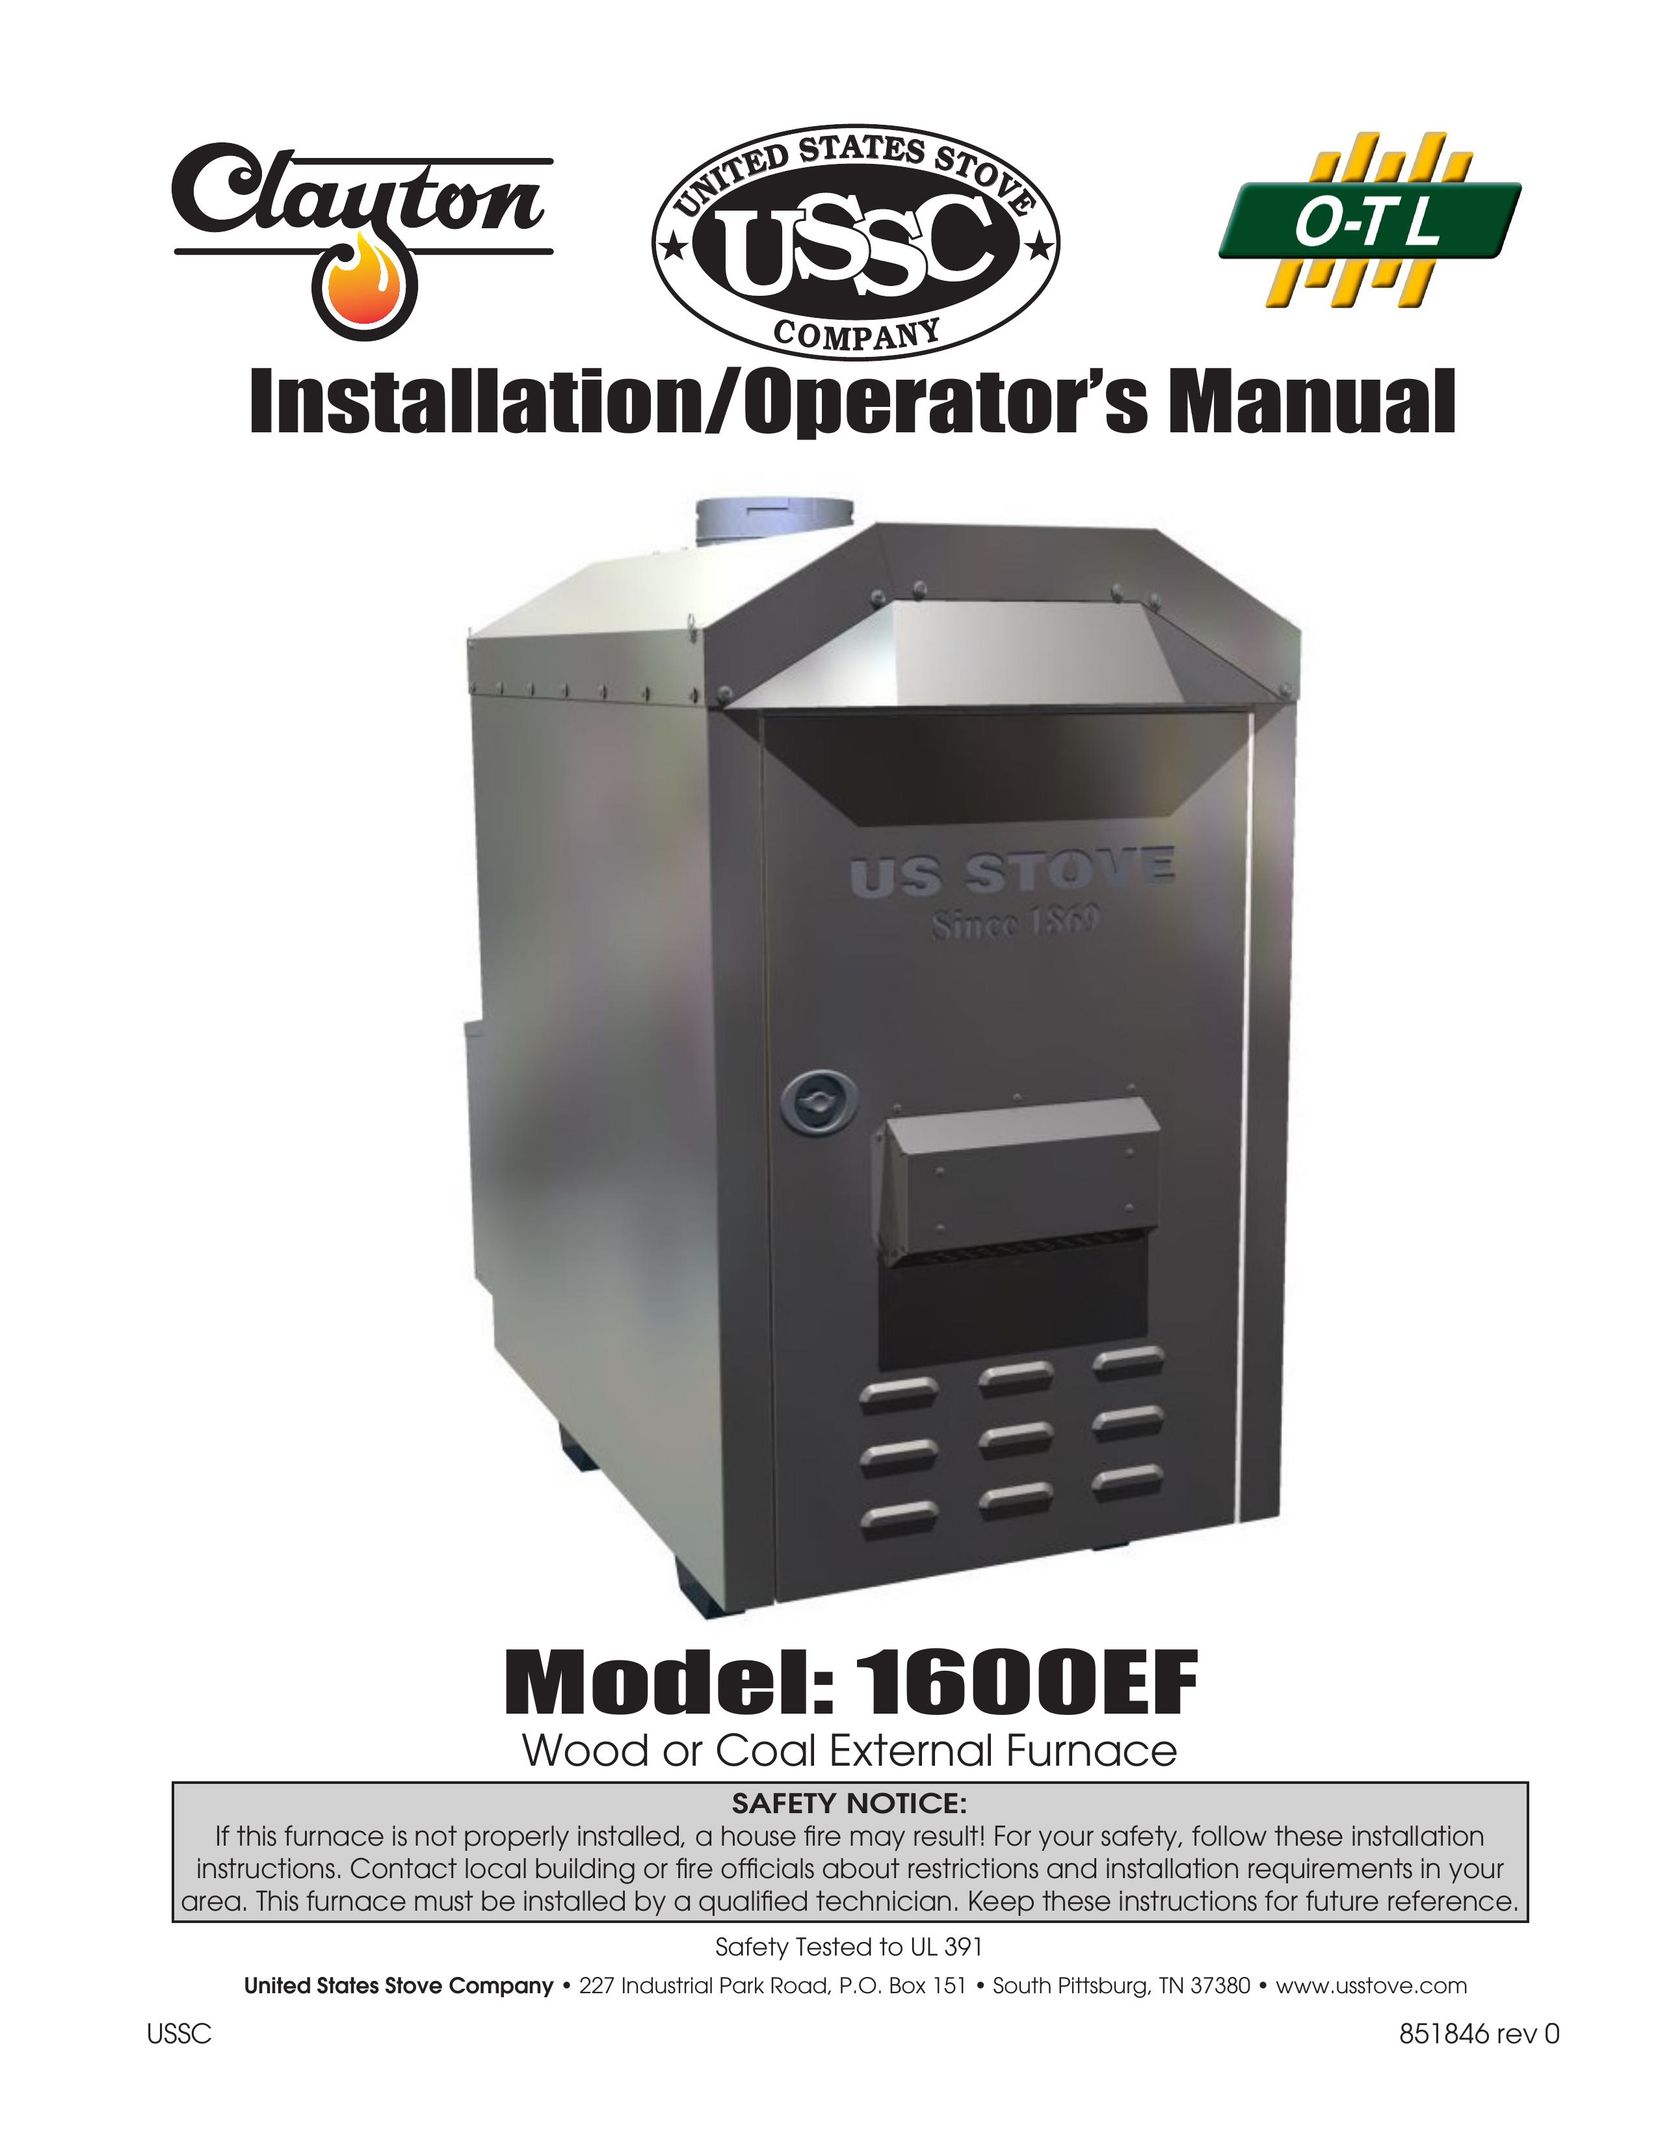 United States Stove 1600EF Furnace User Manual